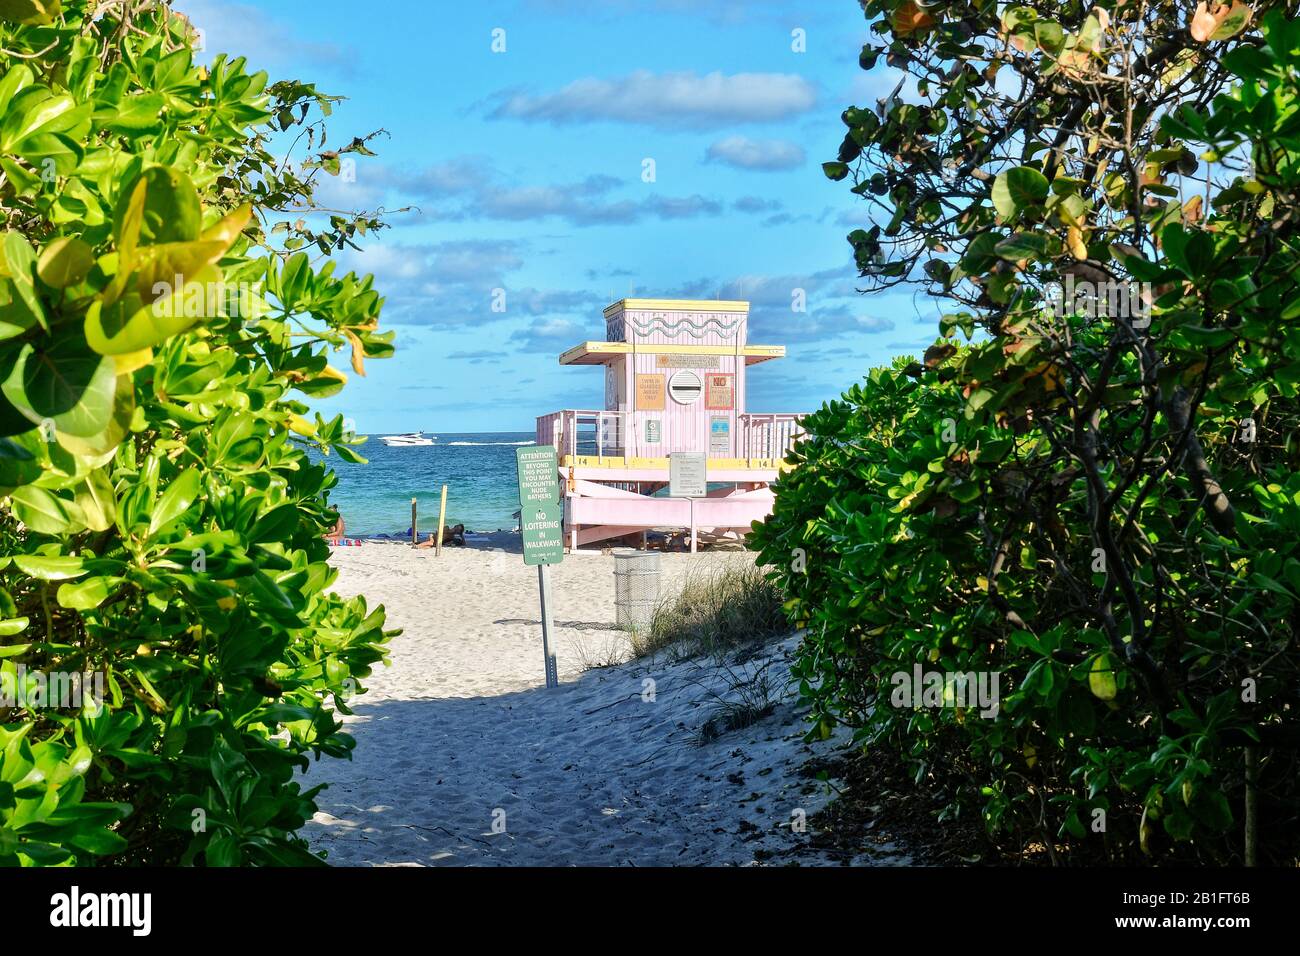 Miami Miami Beach Haulover S Naturist Park Fl Stock Photo Alamy